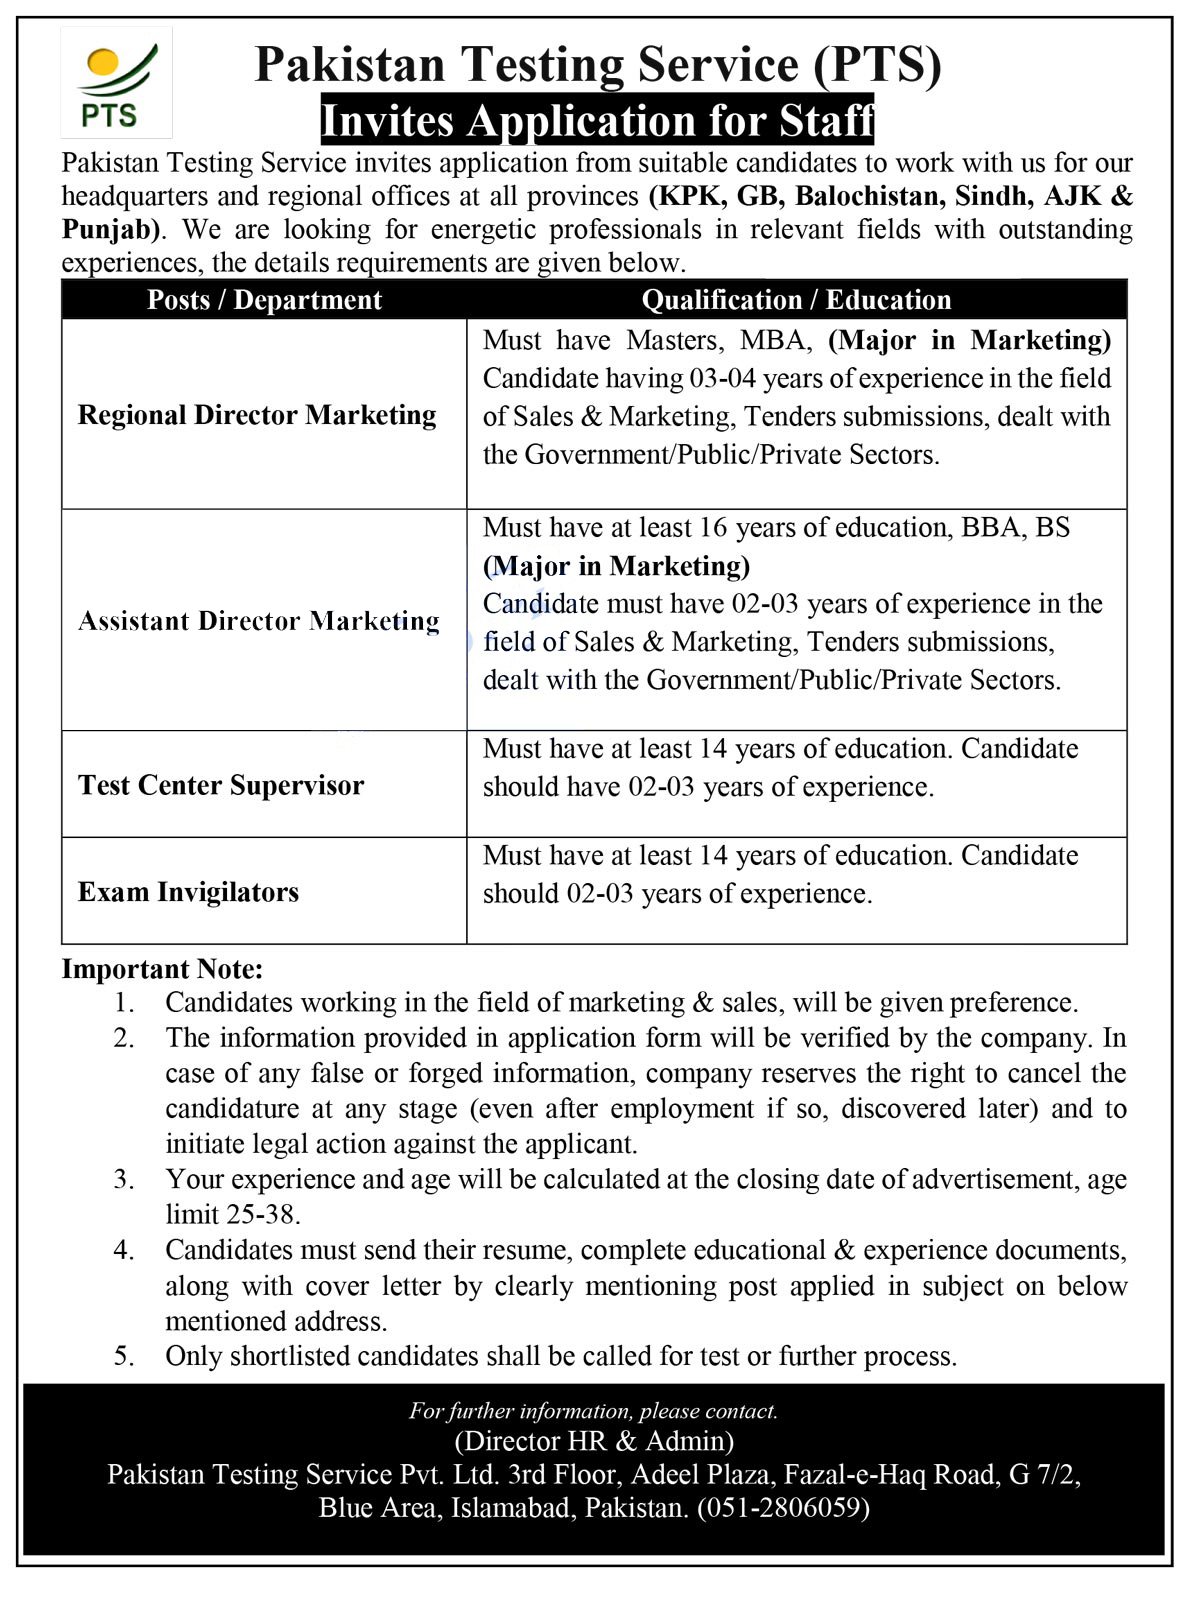 Pakistan Testing Service PTS Jobs 2023 for Invigilators